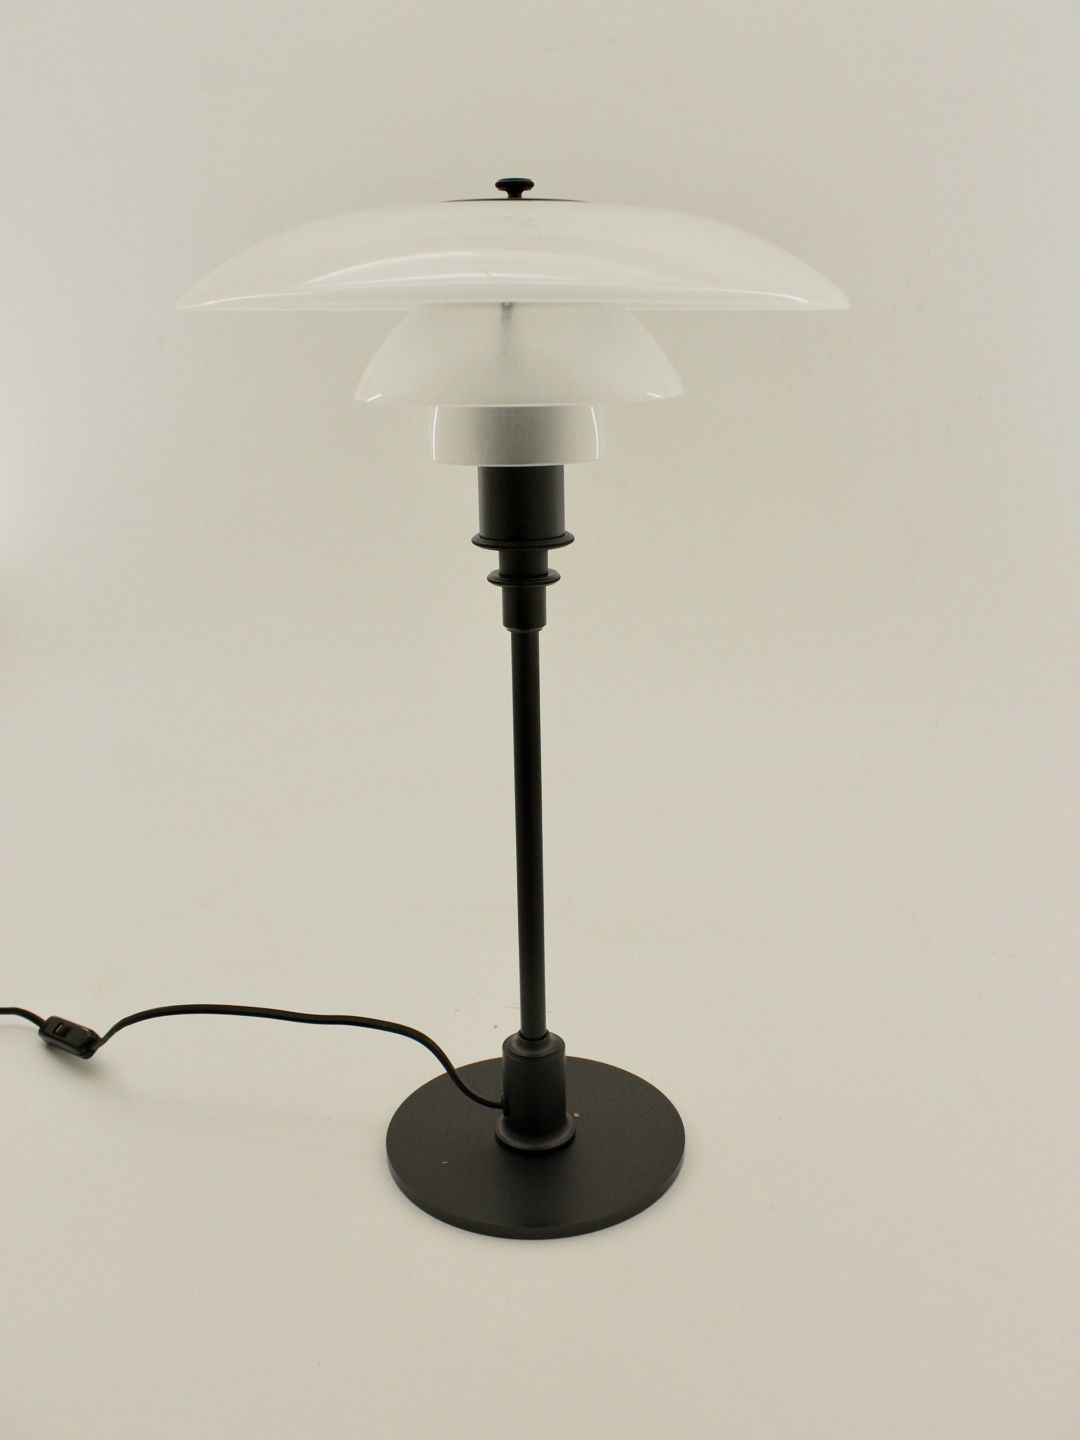 KAD - PH 3/2 sort metalliseret Louis Poulsen design bordlampe solgt - PH 3/2 sort metalliseret Louis bordlampe solgt